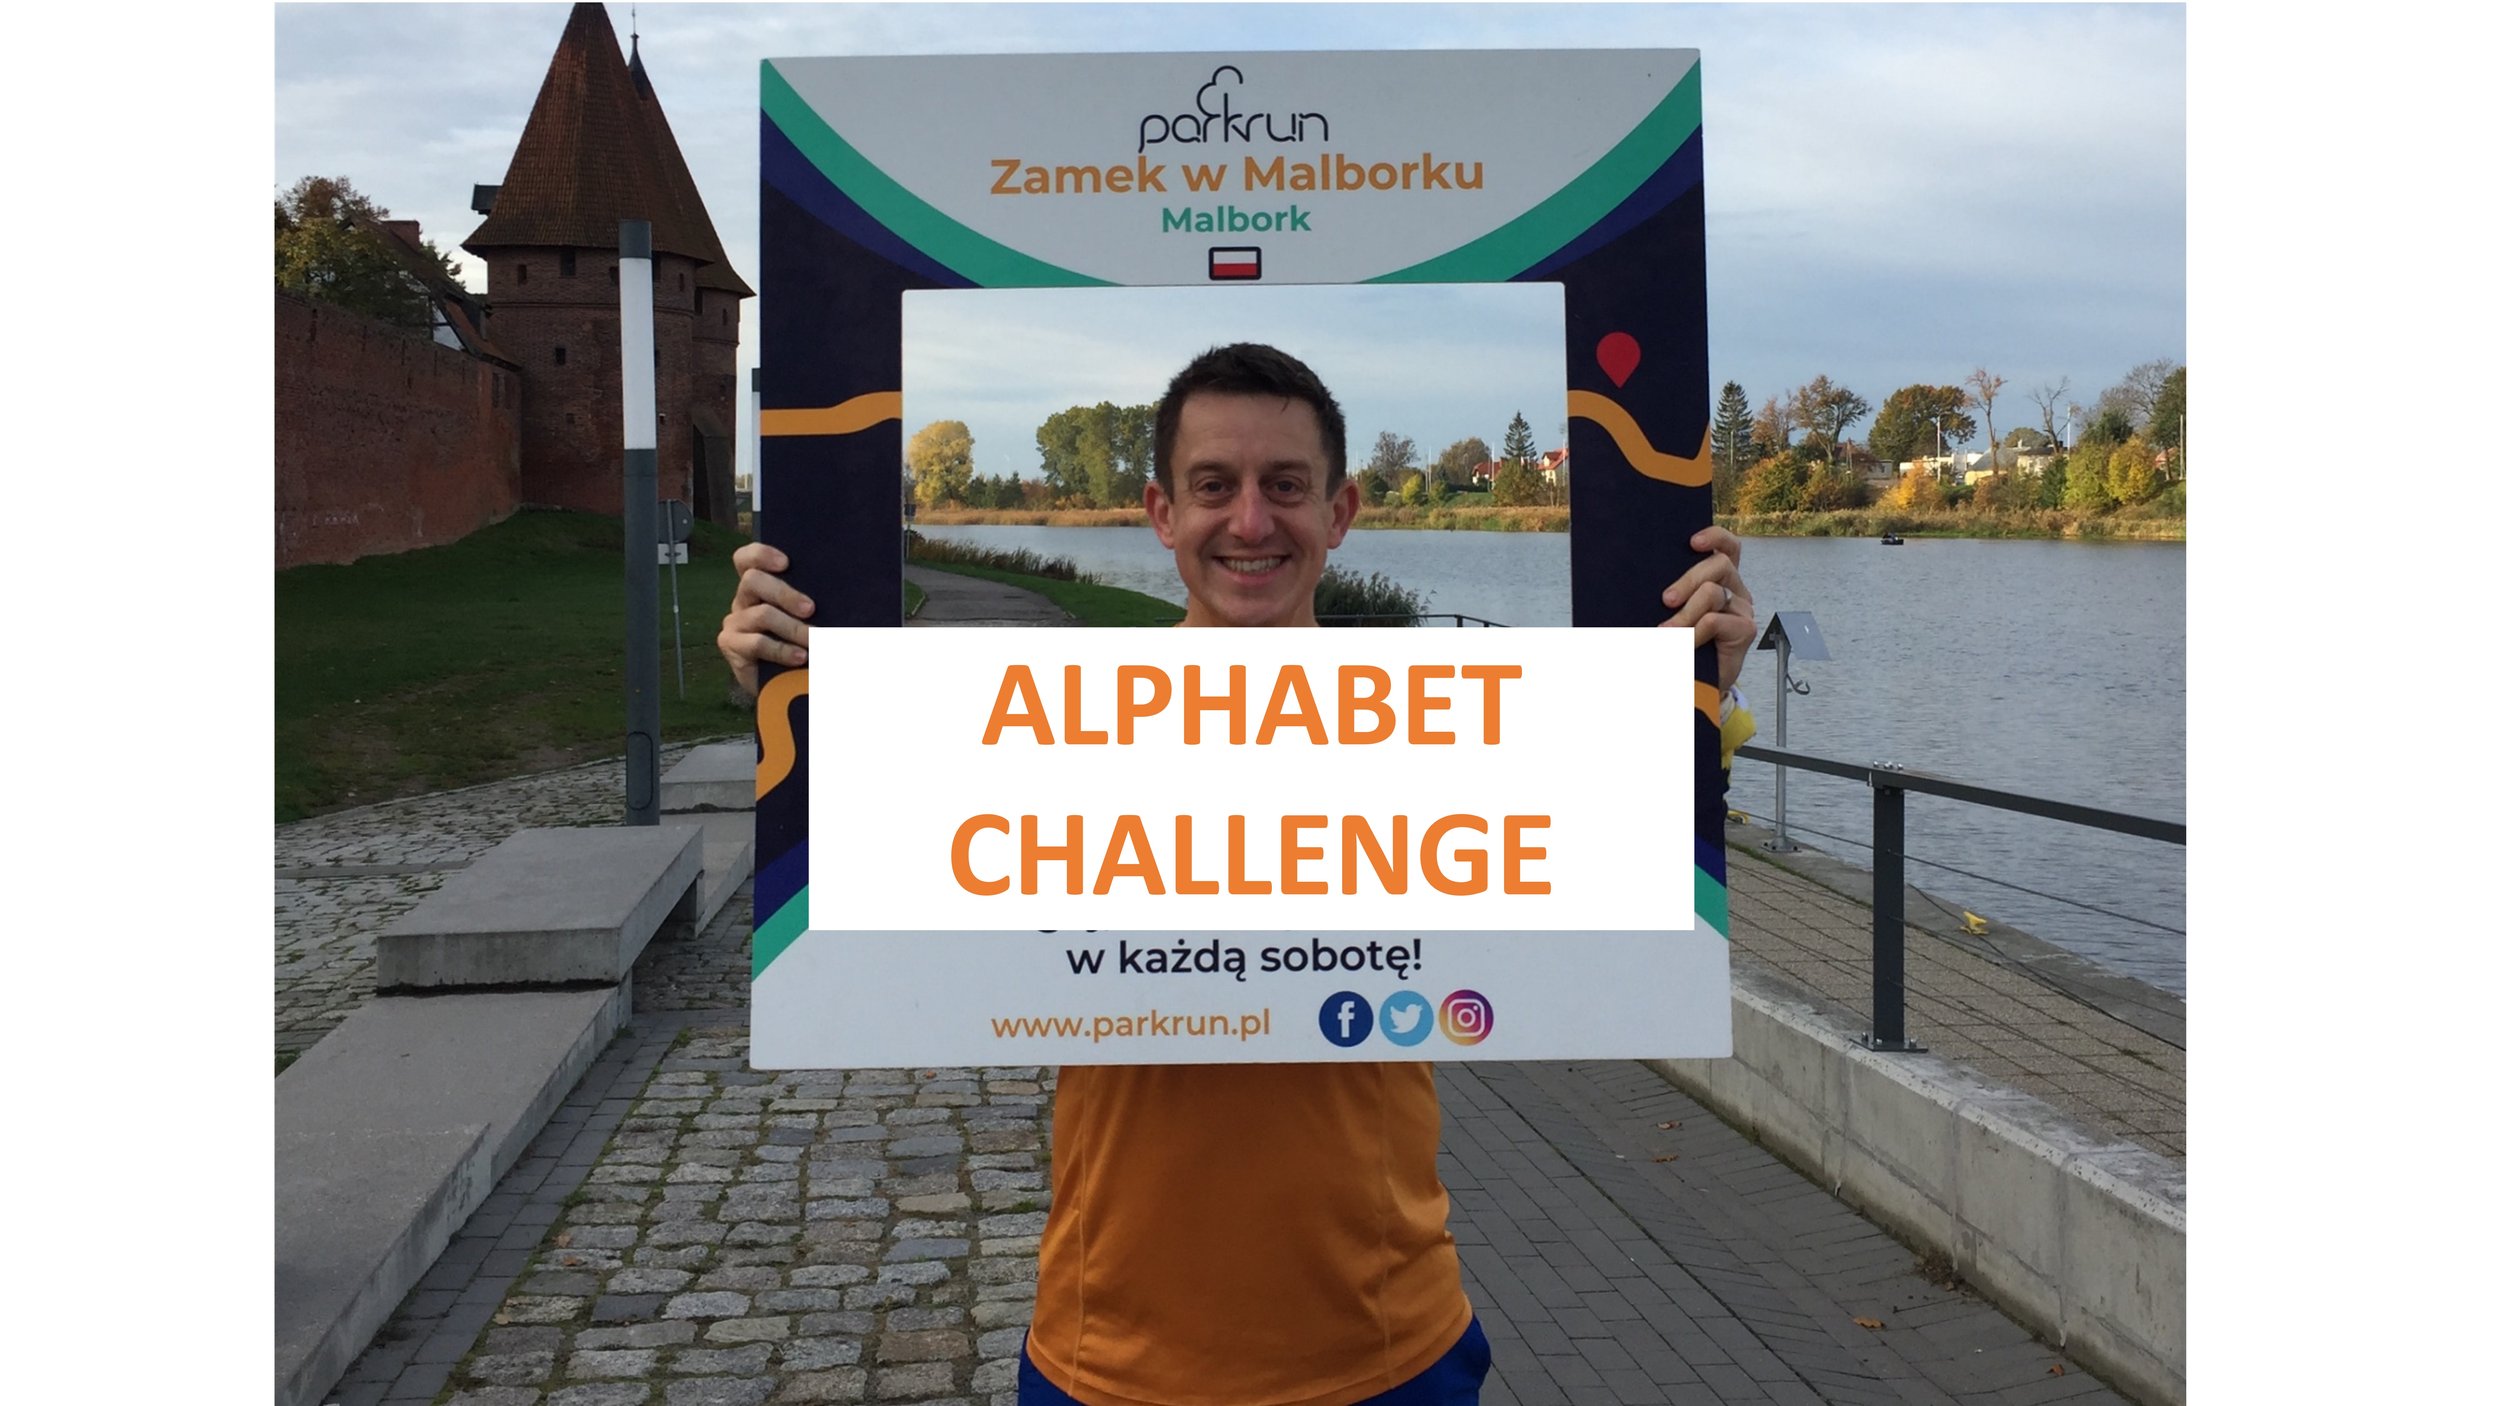 Alphabet Challenge